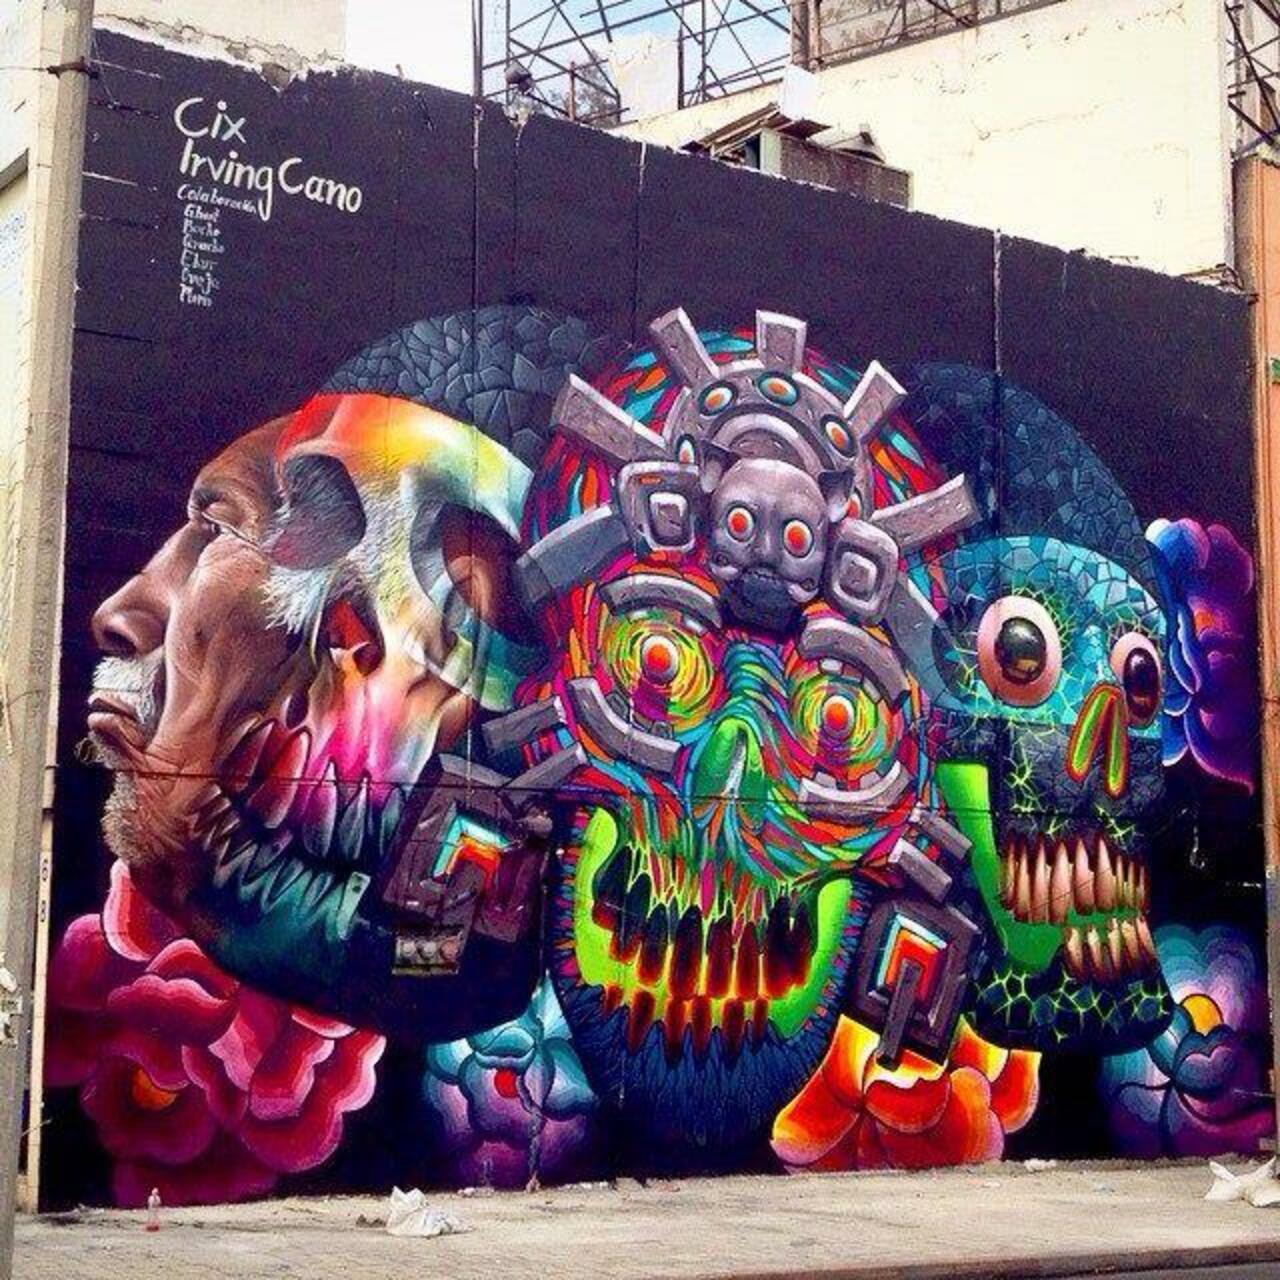 New Street Art by Irving Cano and Cix in México.

#art #arte #graffiti #streetart http://t.co/W13xOQgJ10